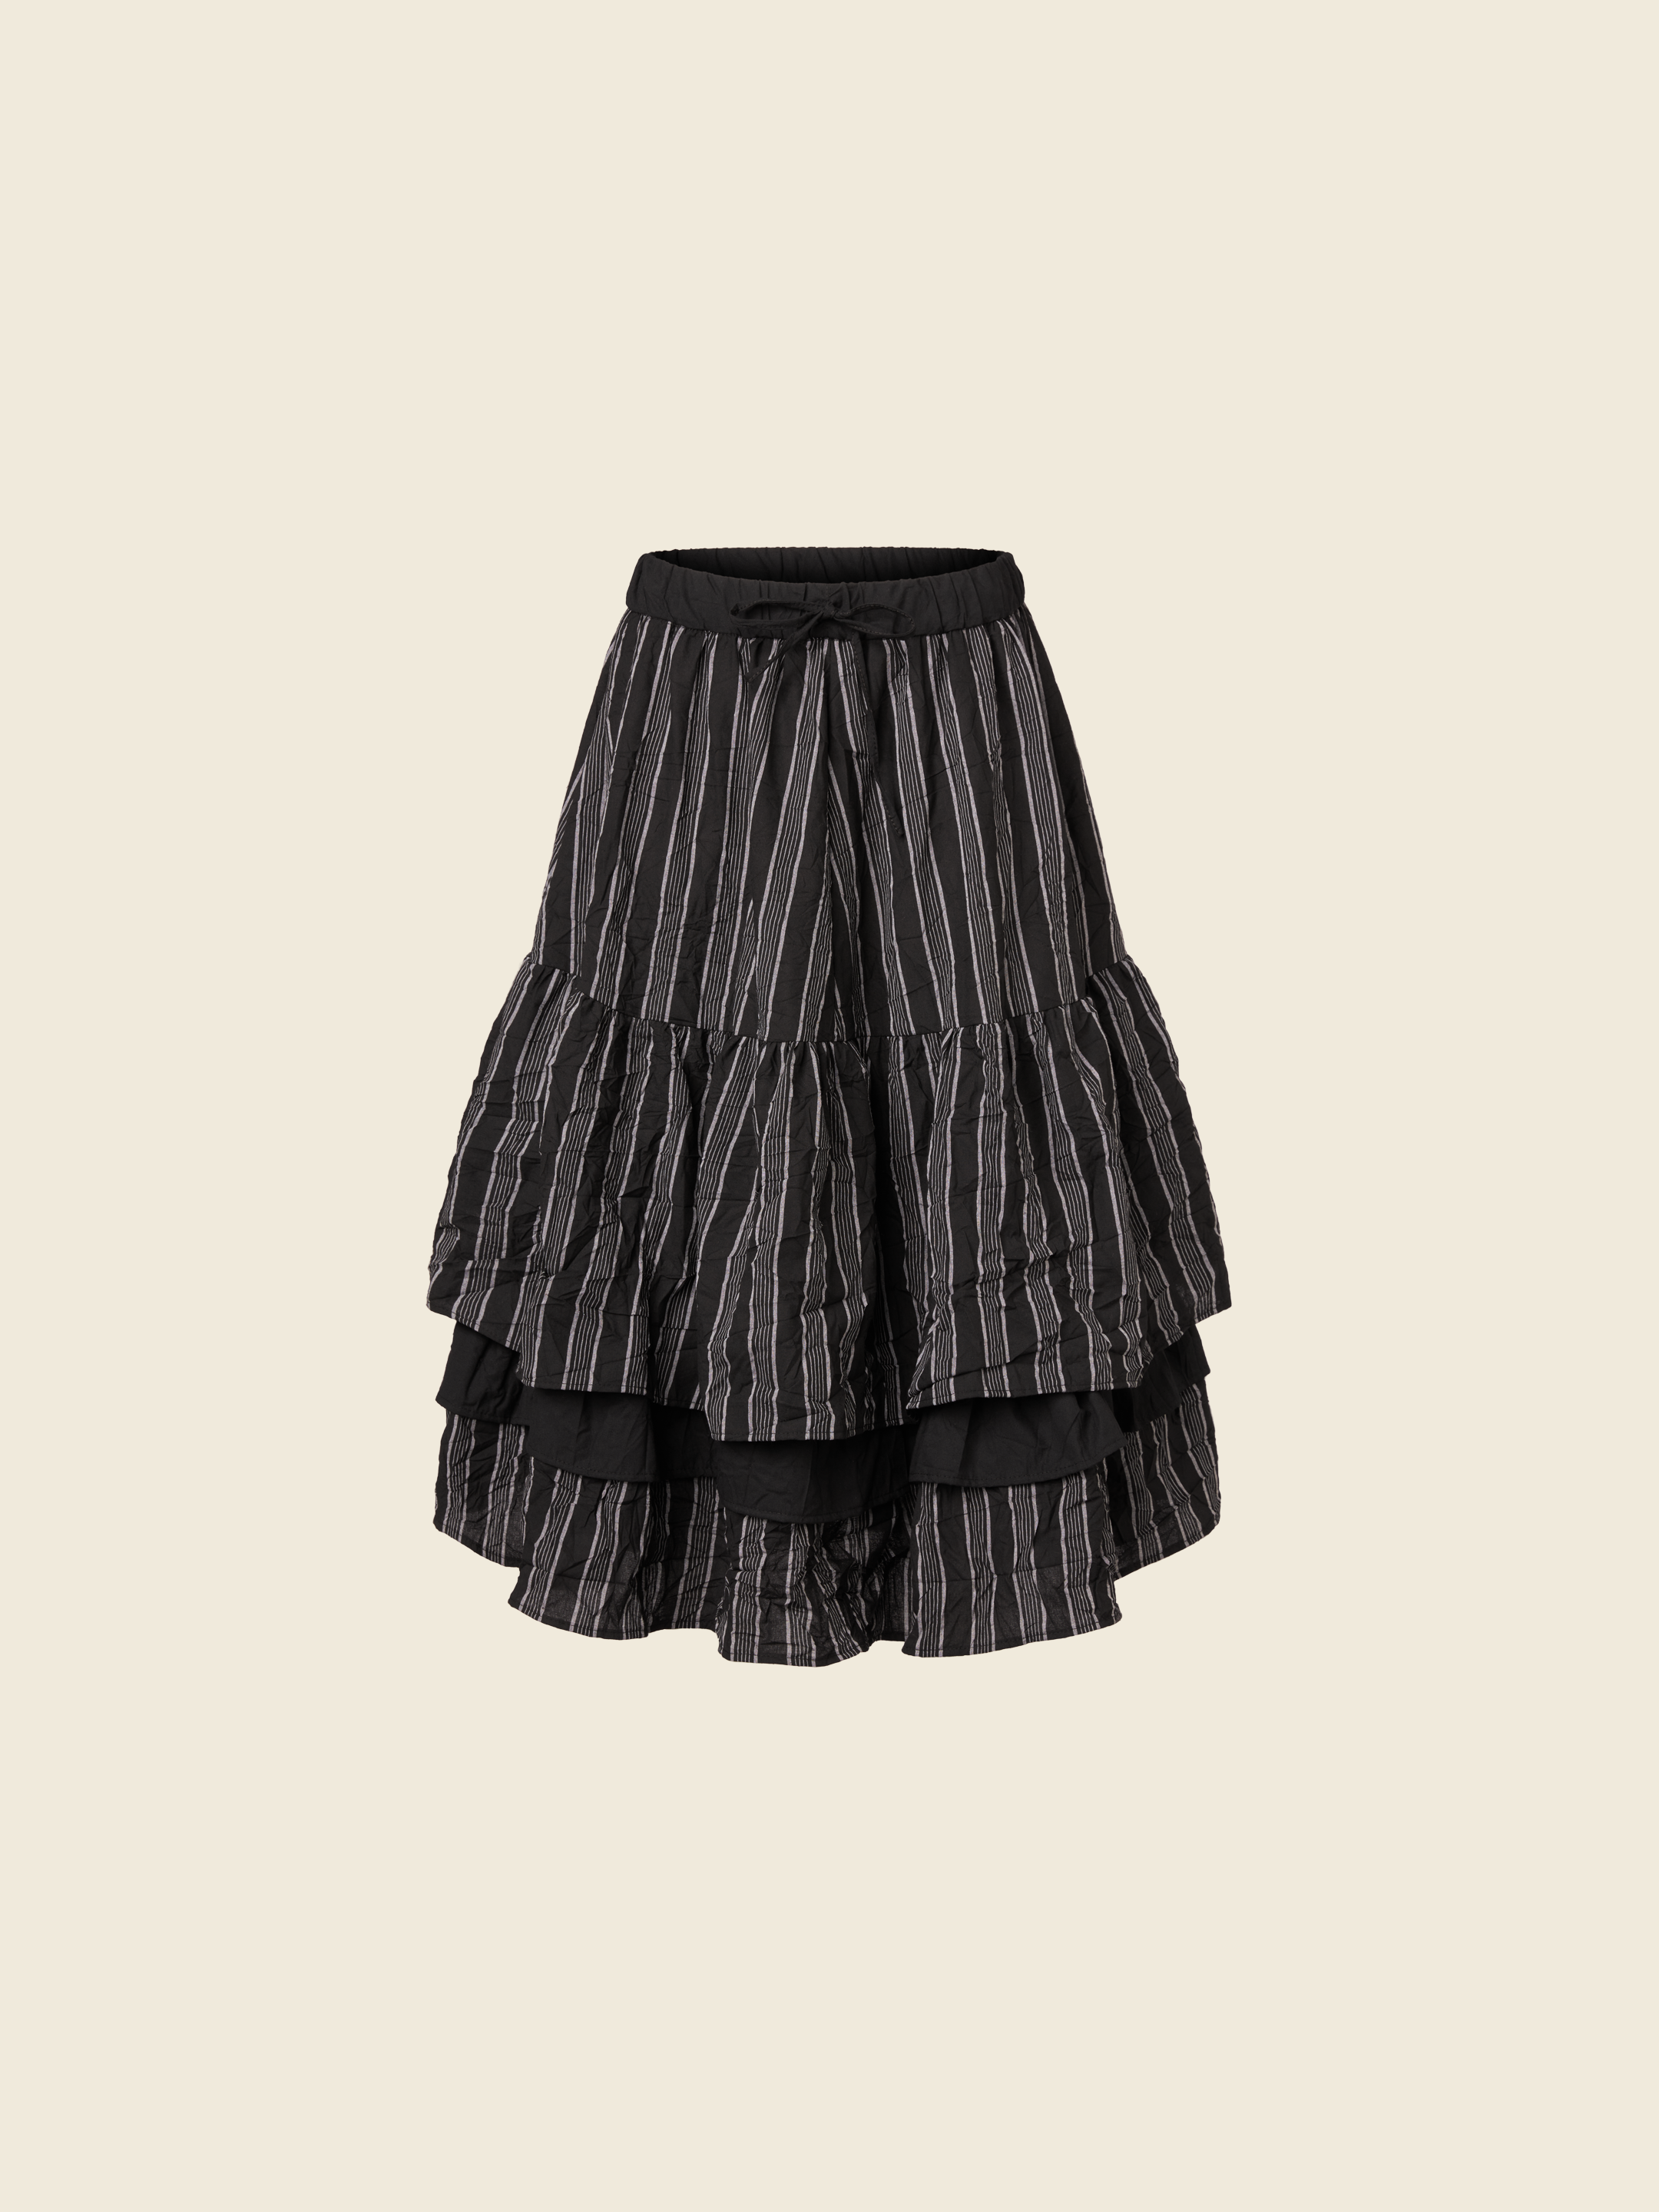 Buy Kasper Women's Slim to Flounce Skirt, Pale Sun Combo, 4 at Amazon.in